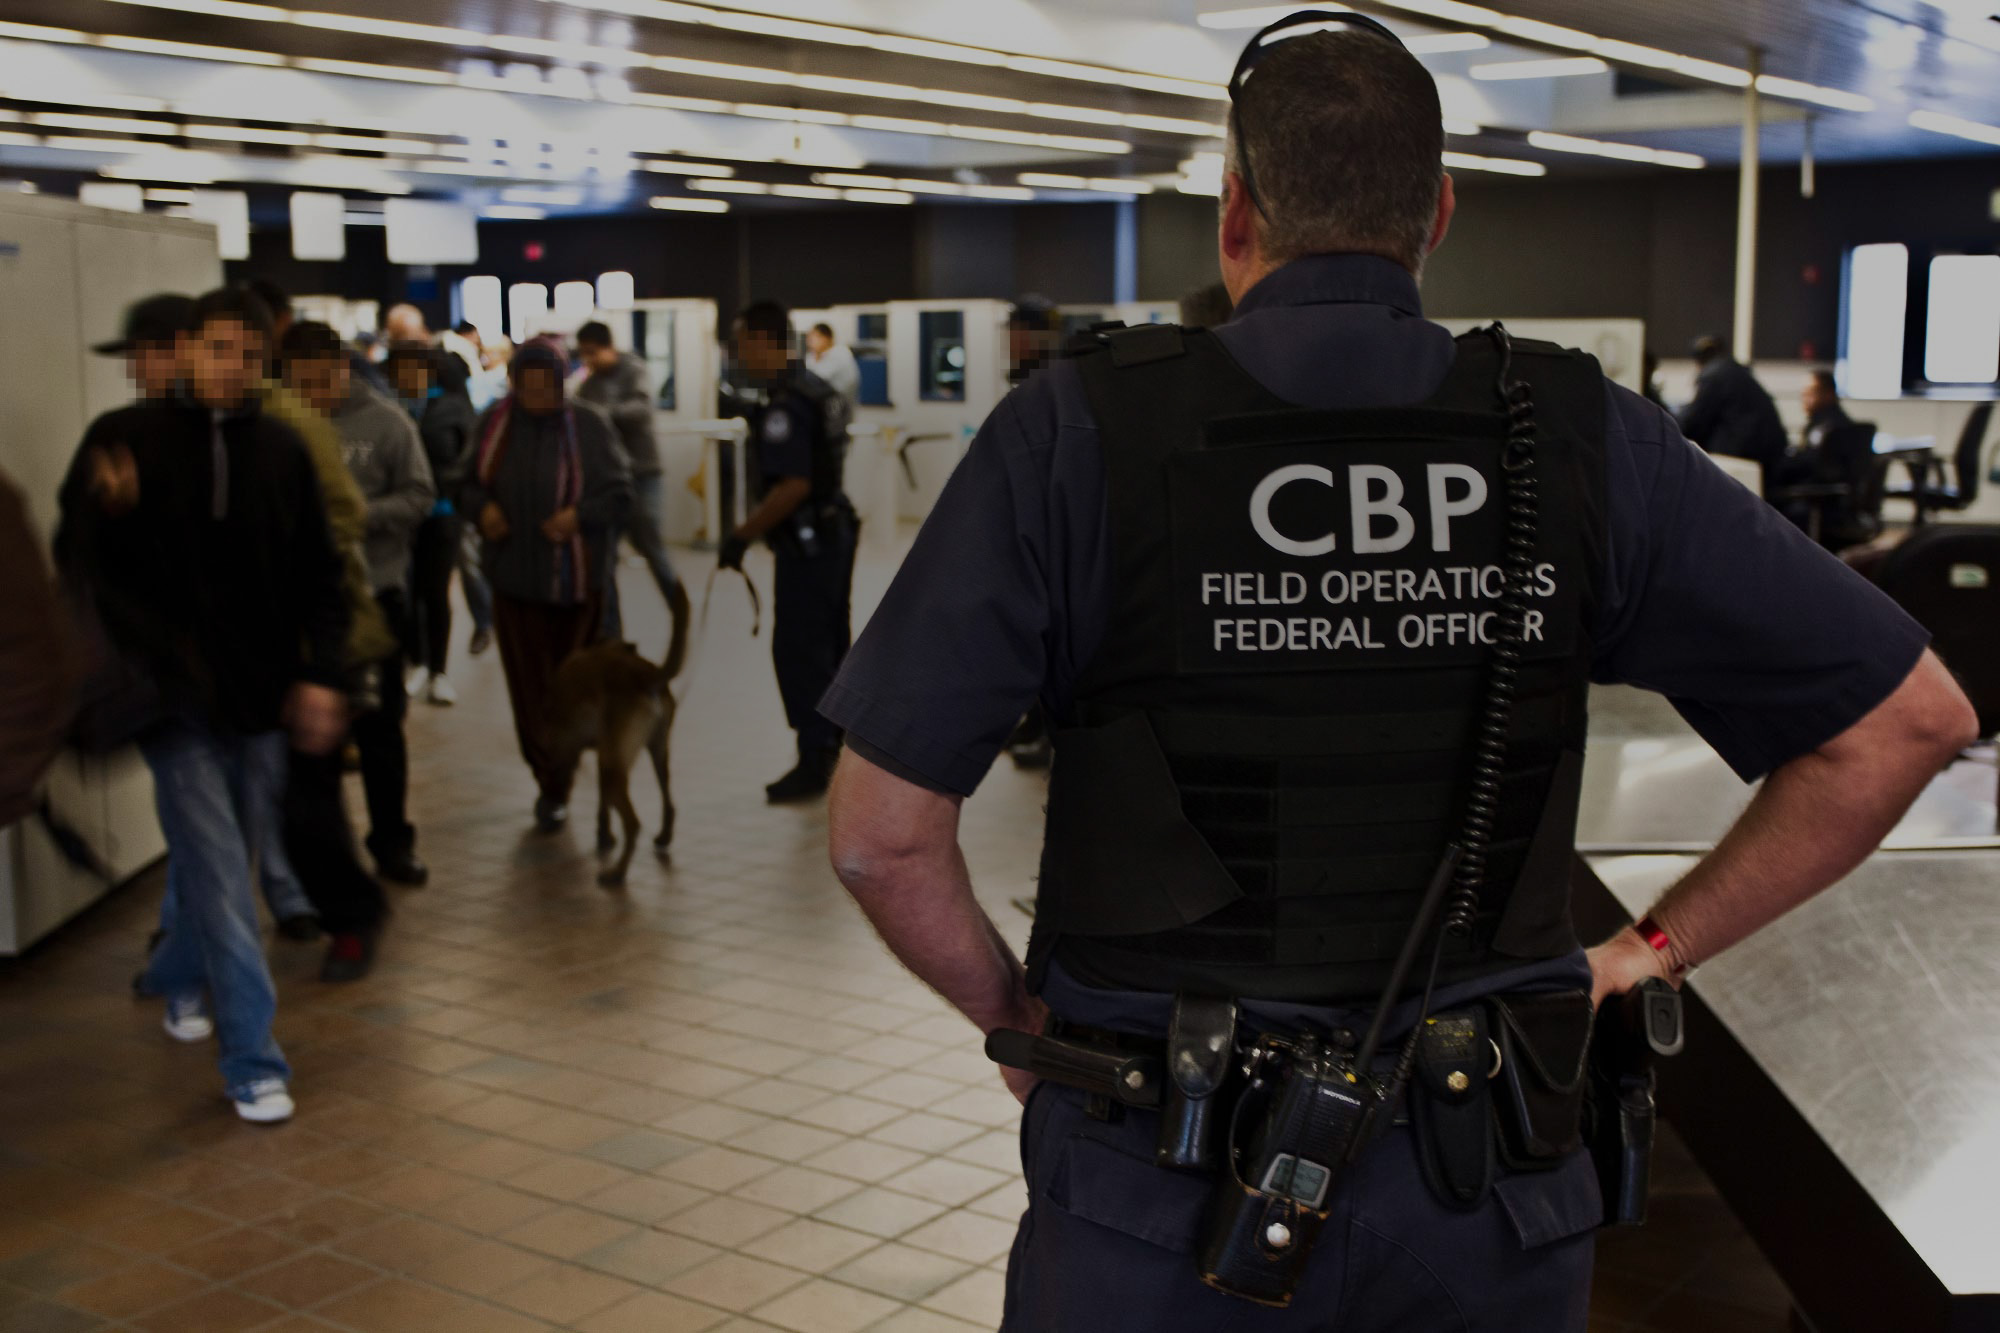 U.S. Customs and Border Protection (CBP) Horizontal Bifold Hidden